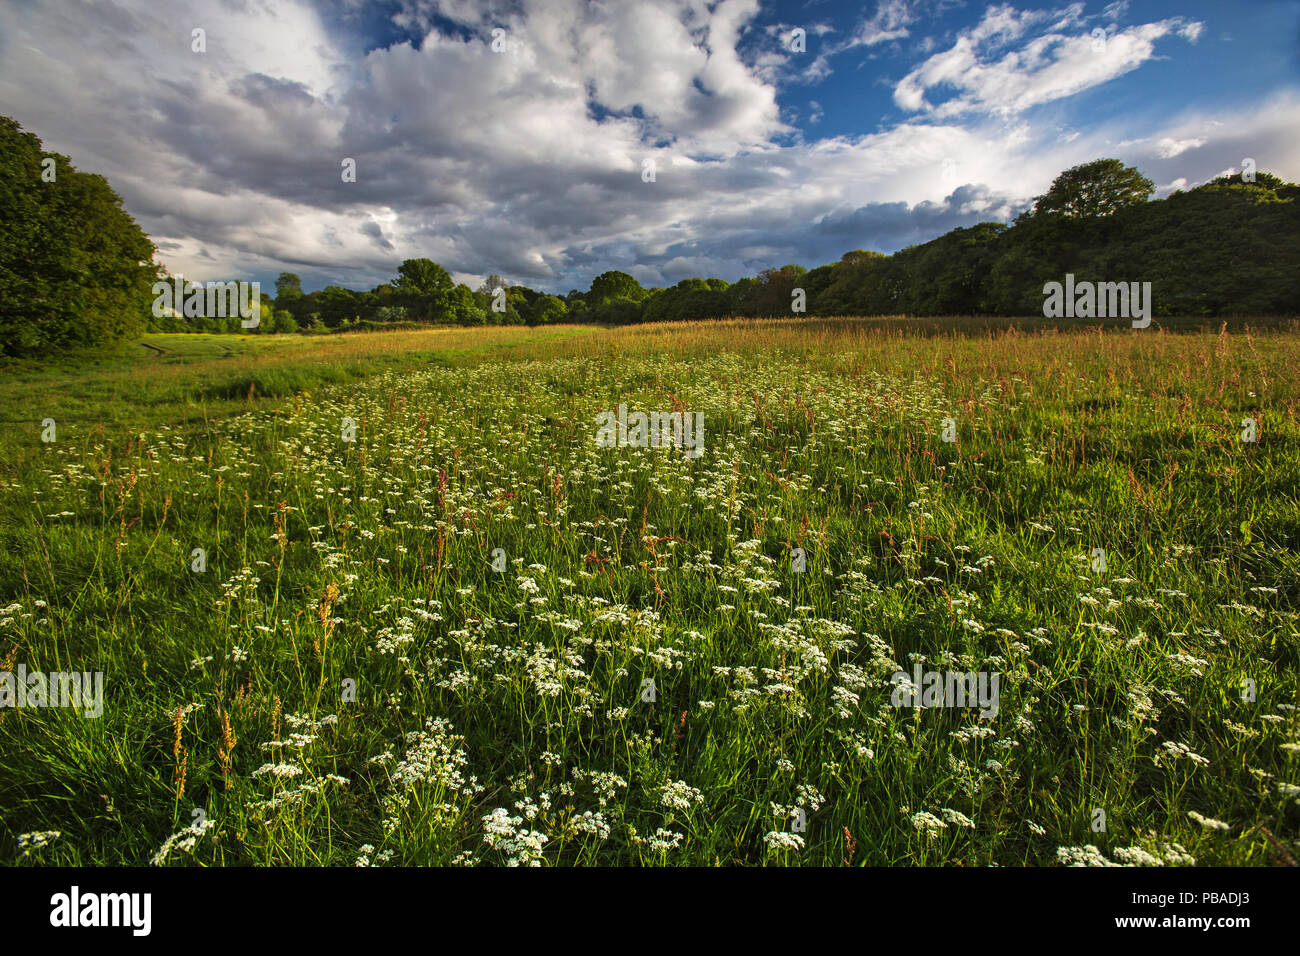 Wildflower field with Common sorrel (Rumex acetosa) and Pignut flowers (Conopodium majus) Hampstead Heath, London, England, UK. May 2015. Stock Photo